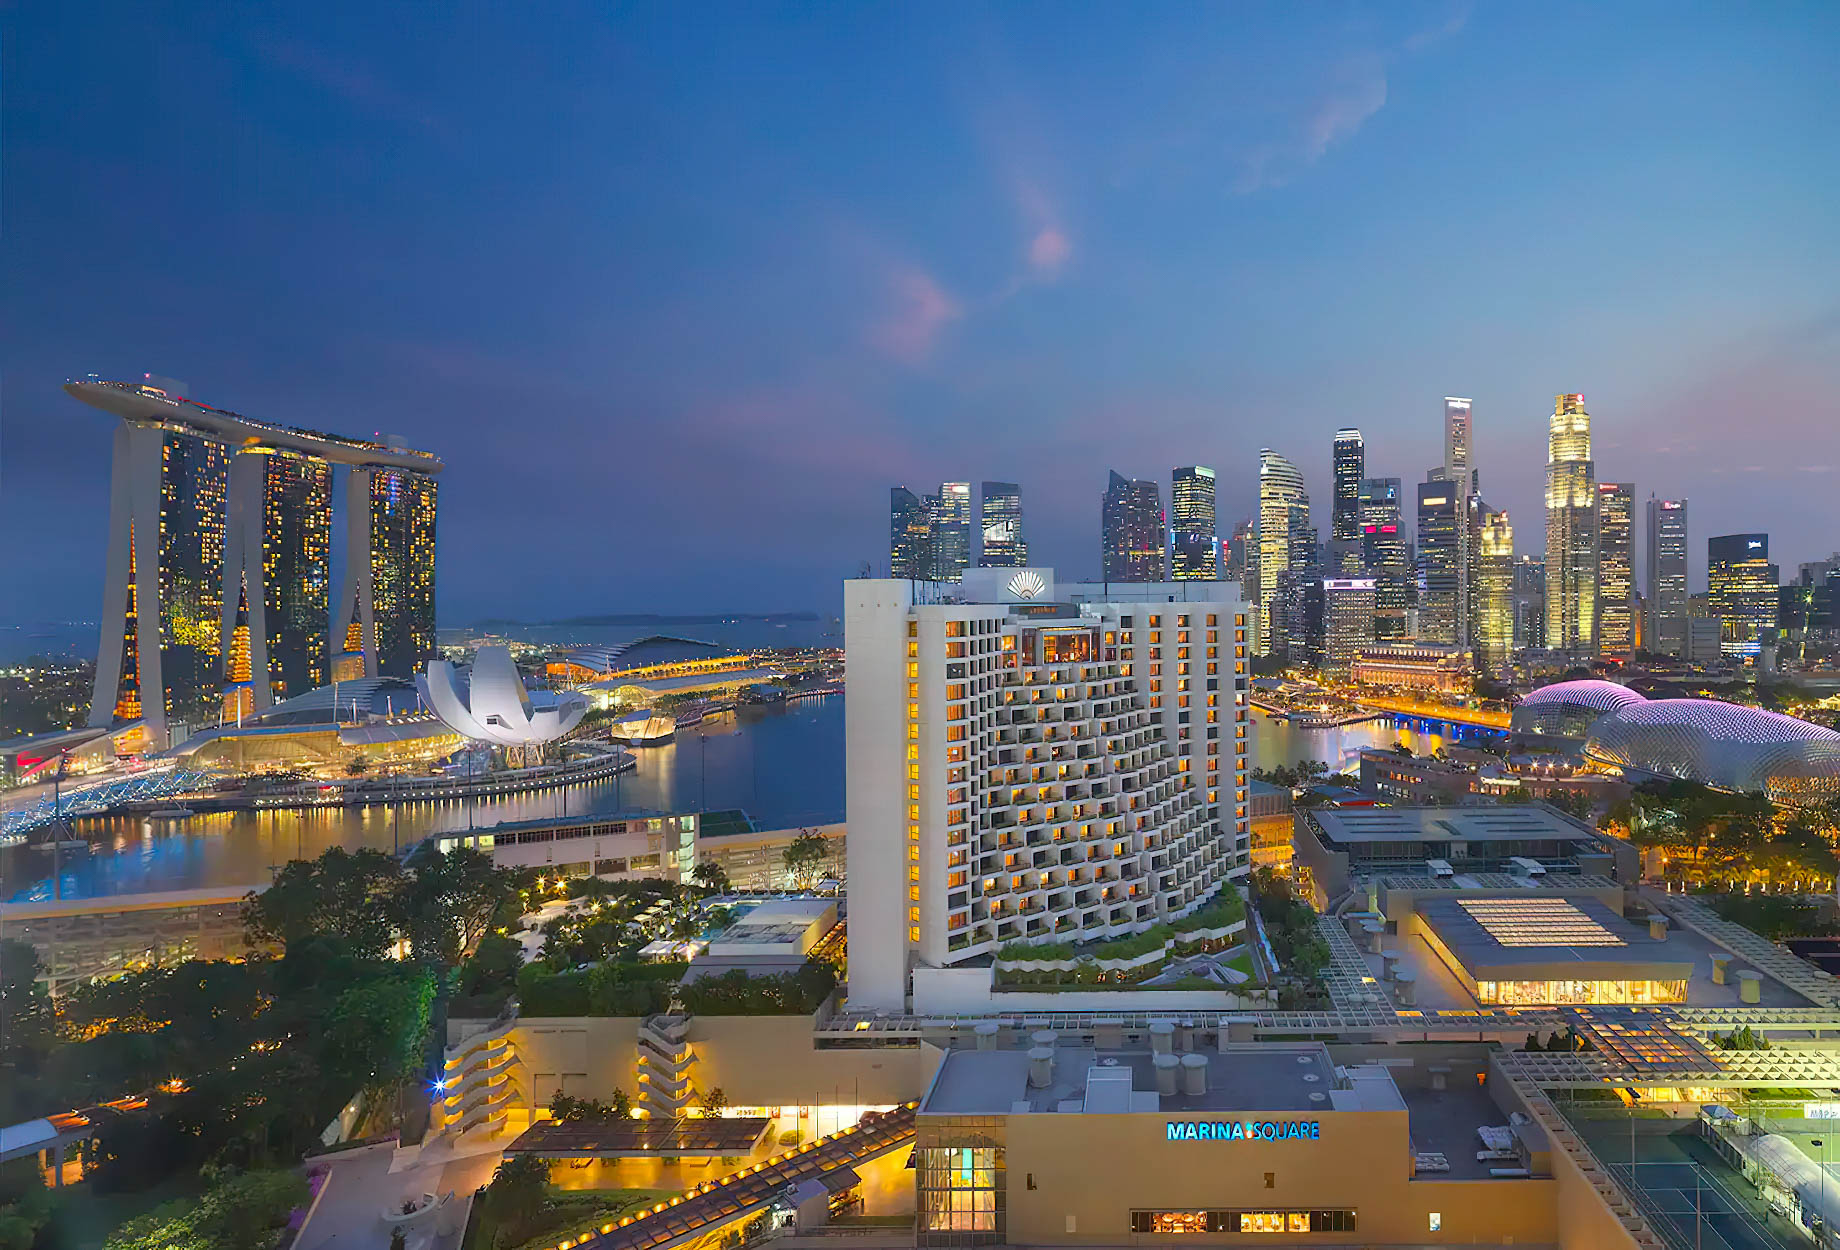 Mandarin Oriental, Singapore Hotel - Singapore - Exterior Aerial View